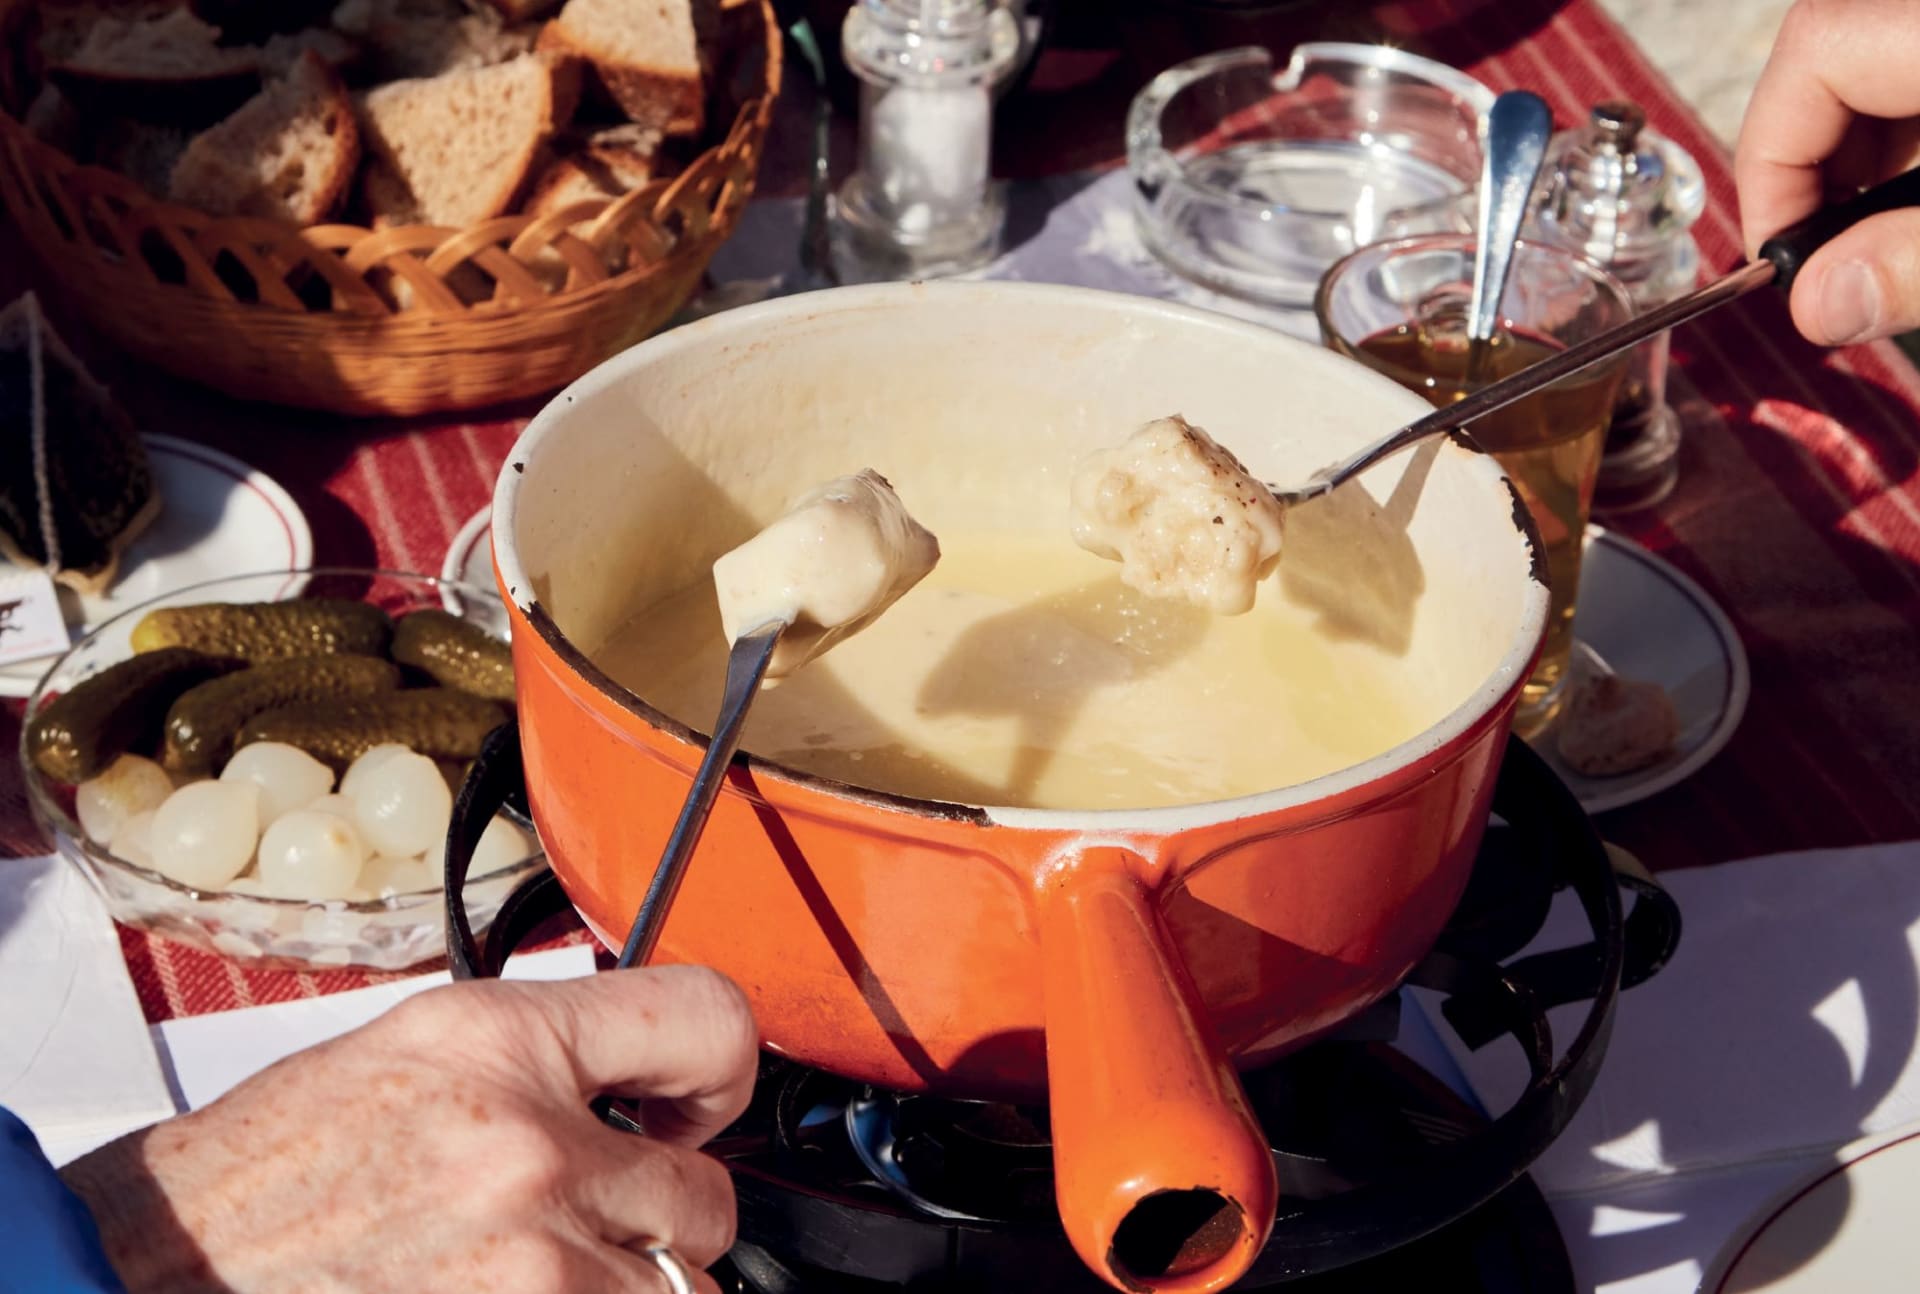 Recept na pravé sýrové fondue ze Švýcarských Alp